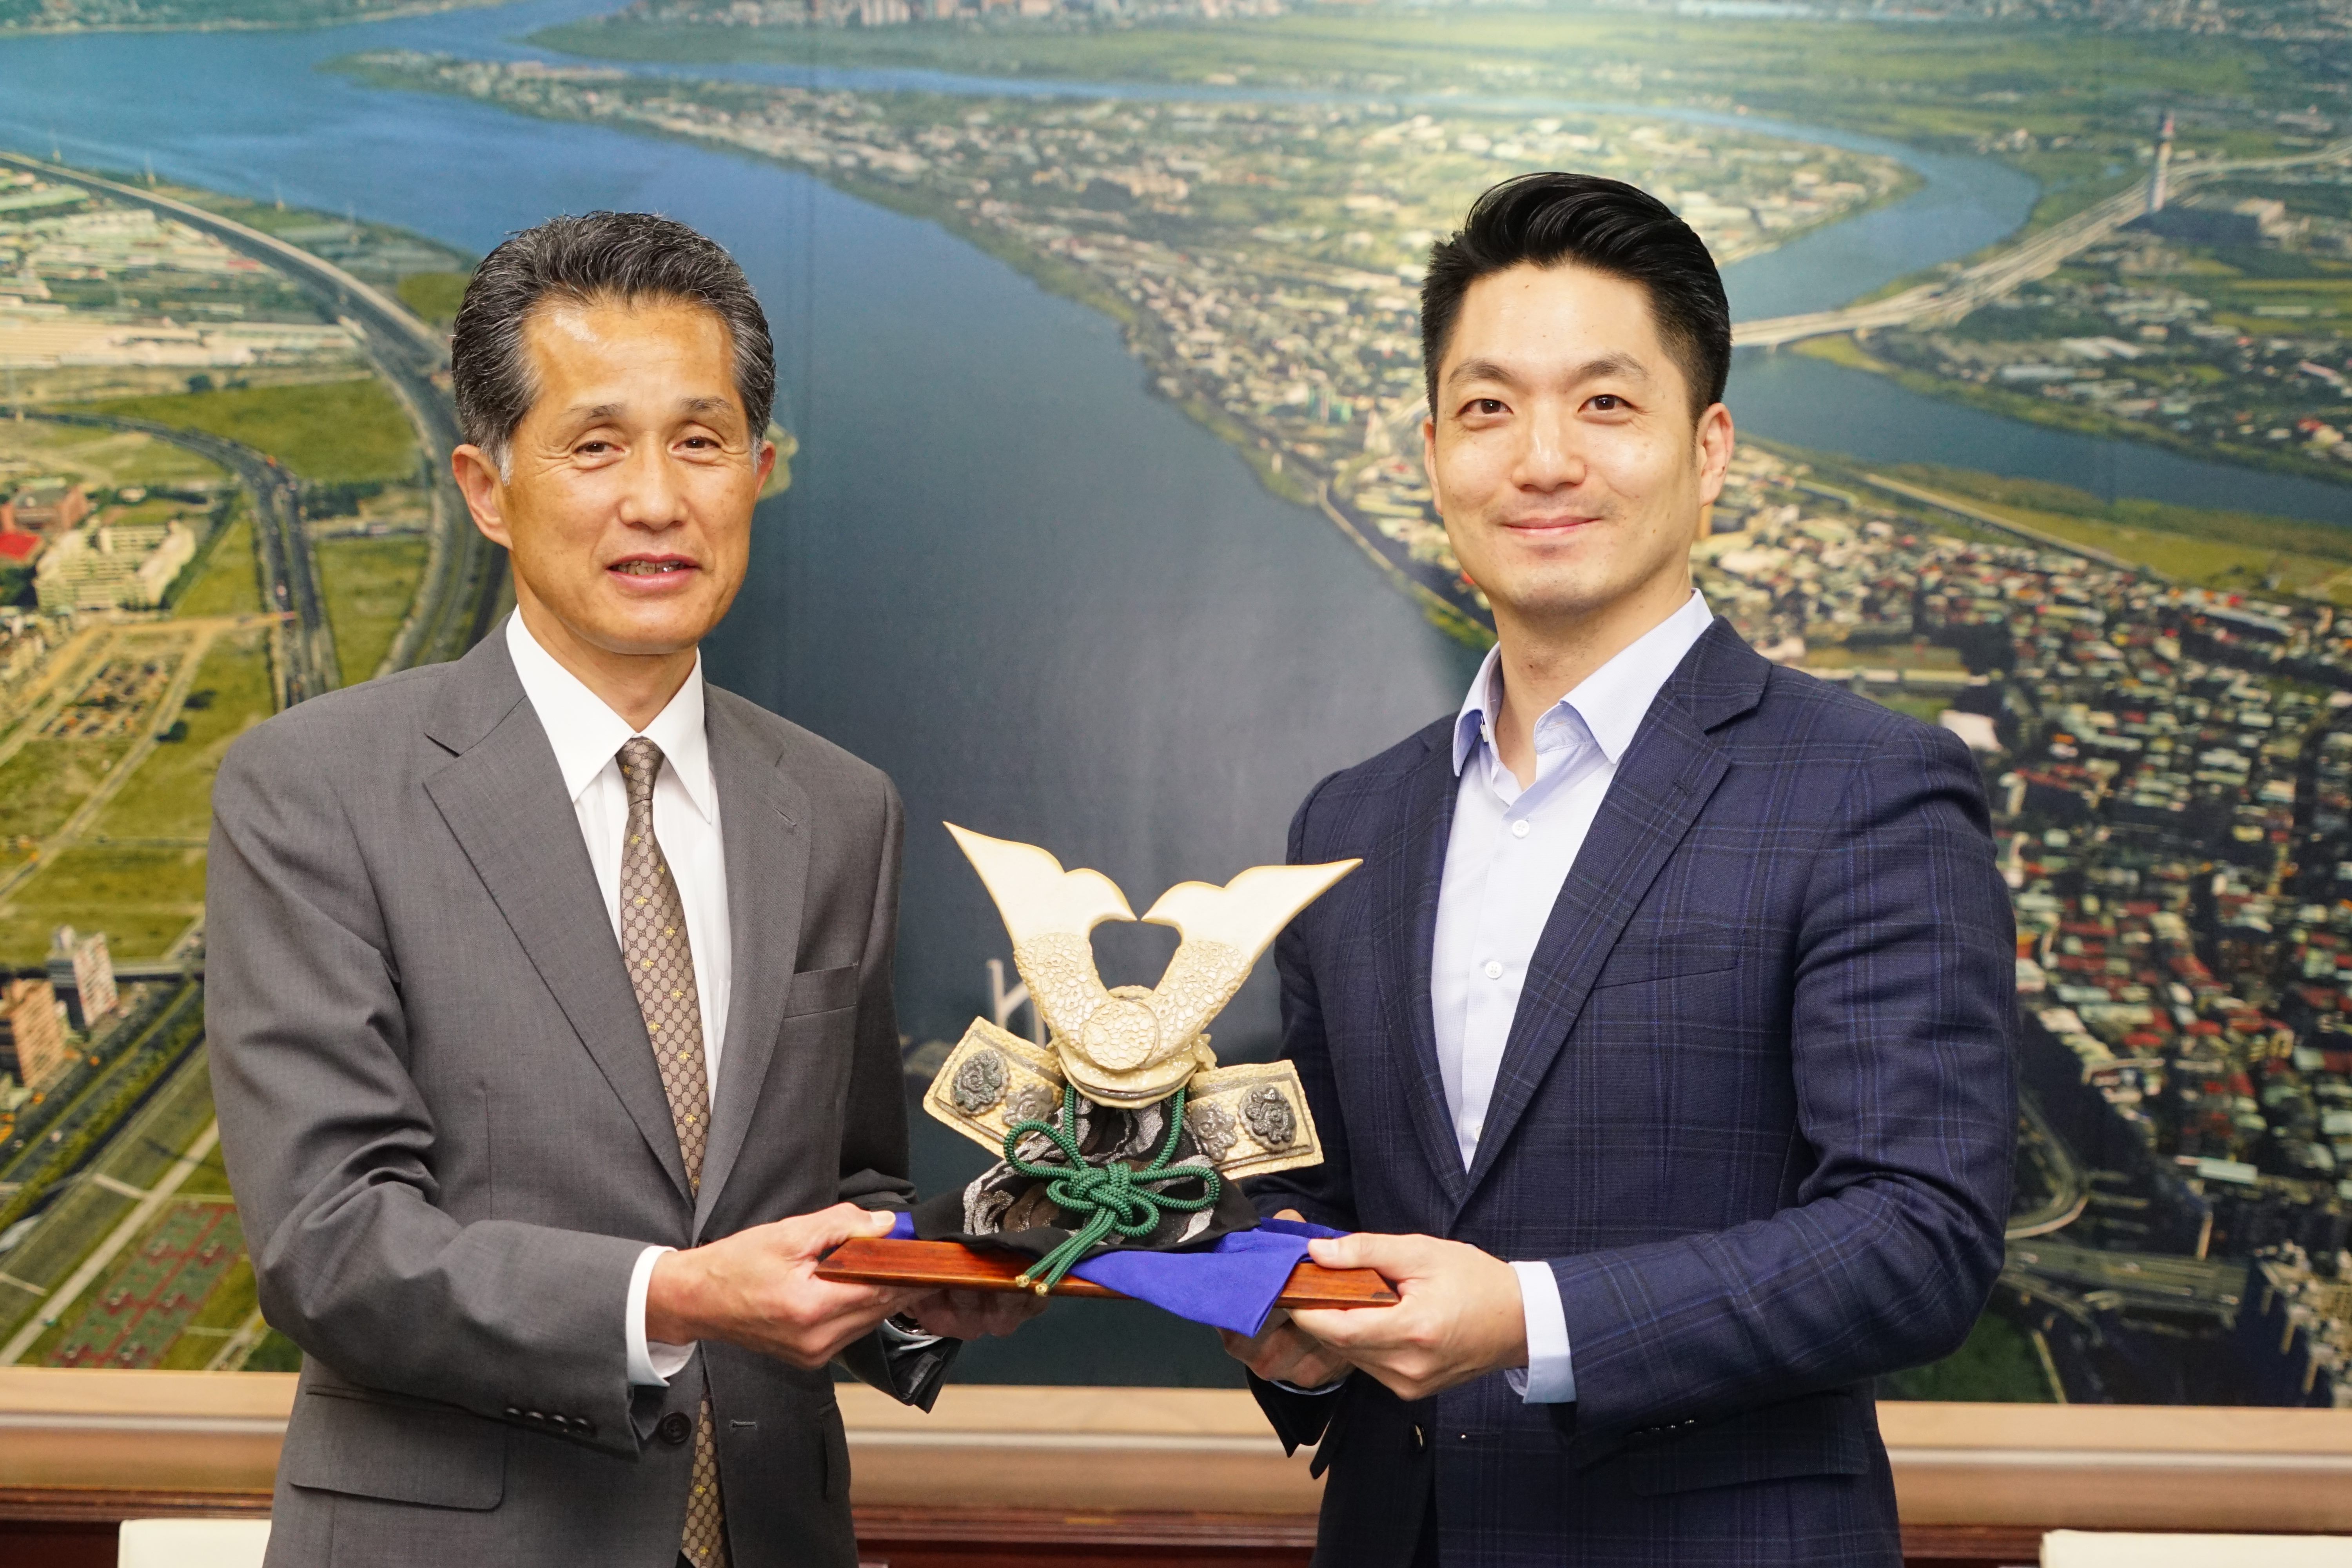 Mayor Chiang exchanging gifts with Mayor Yamaguchi